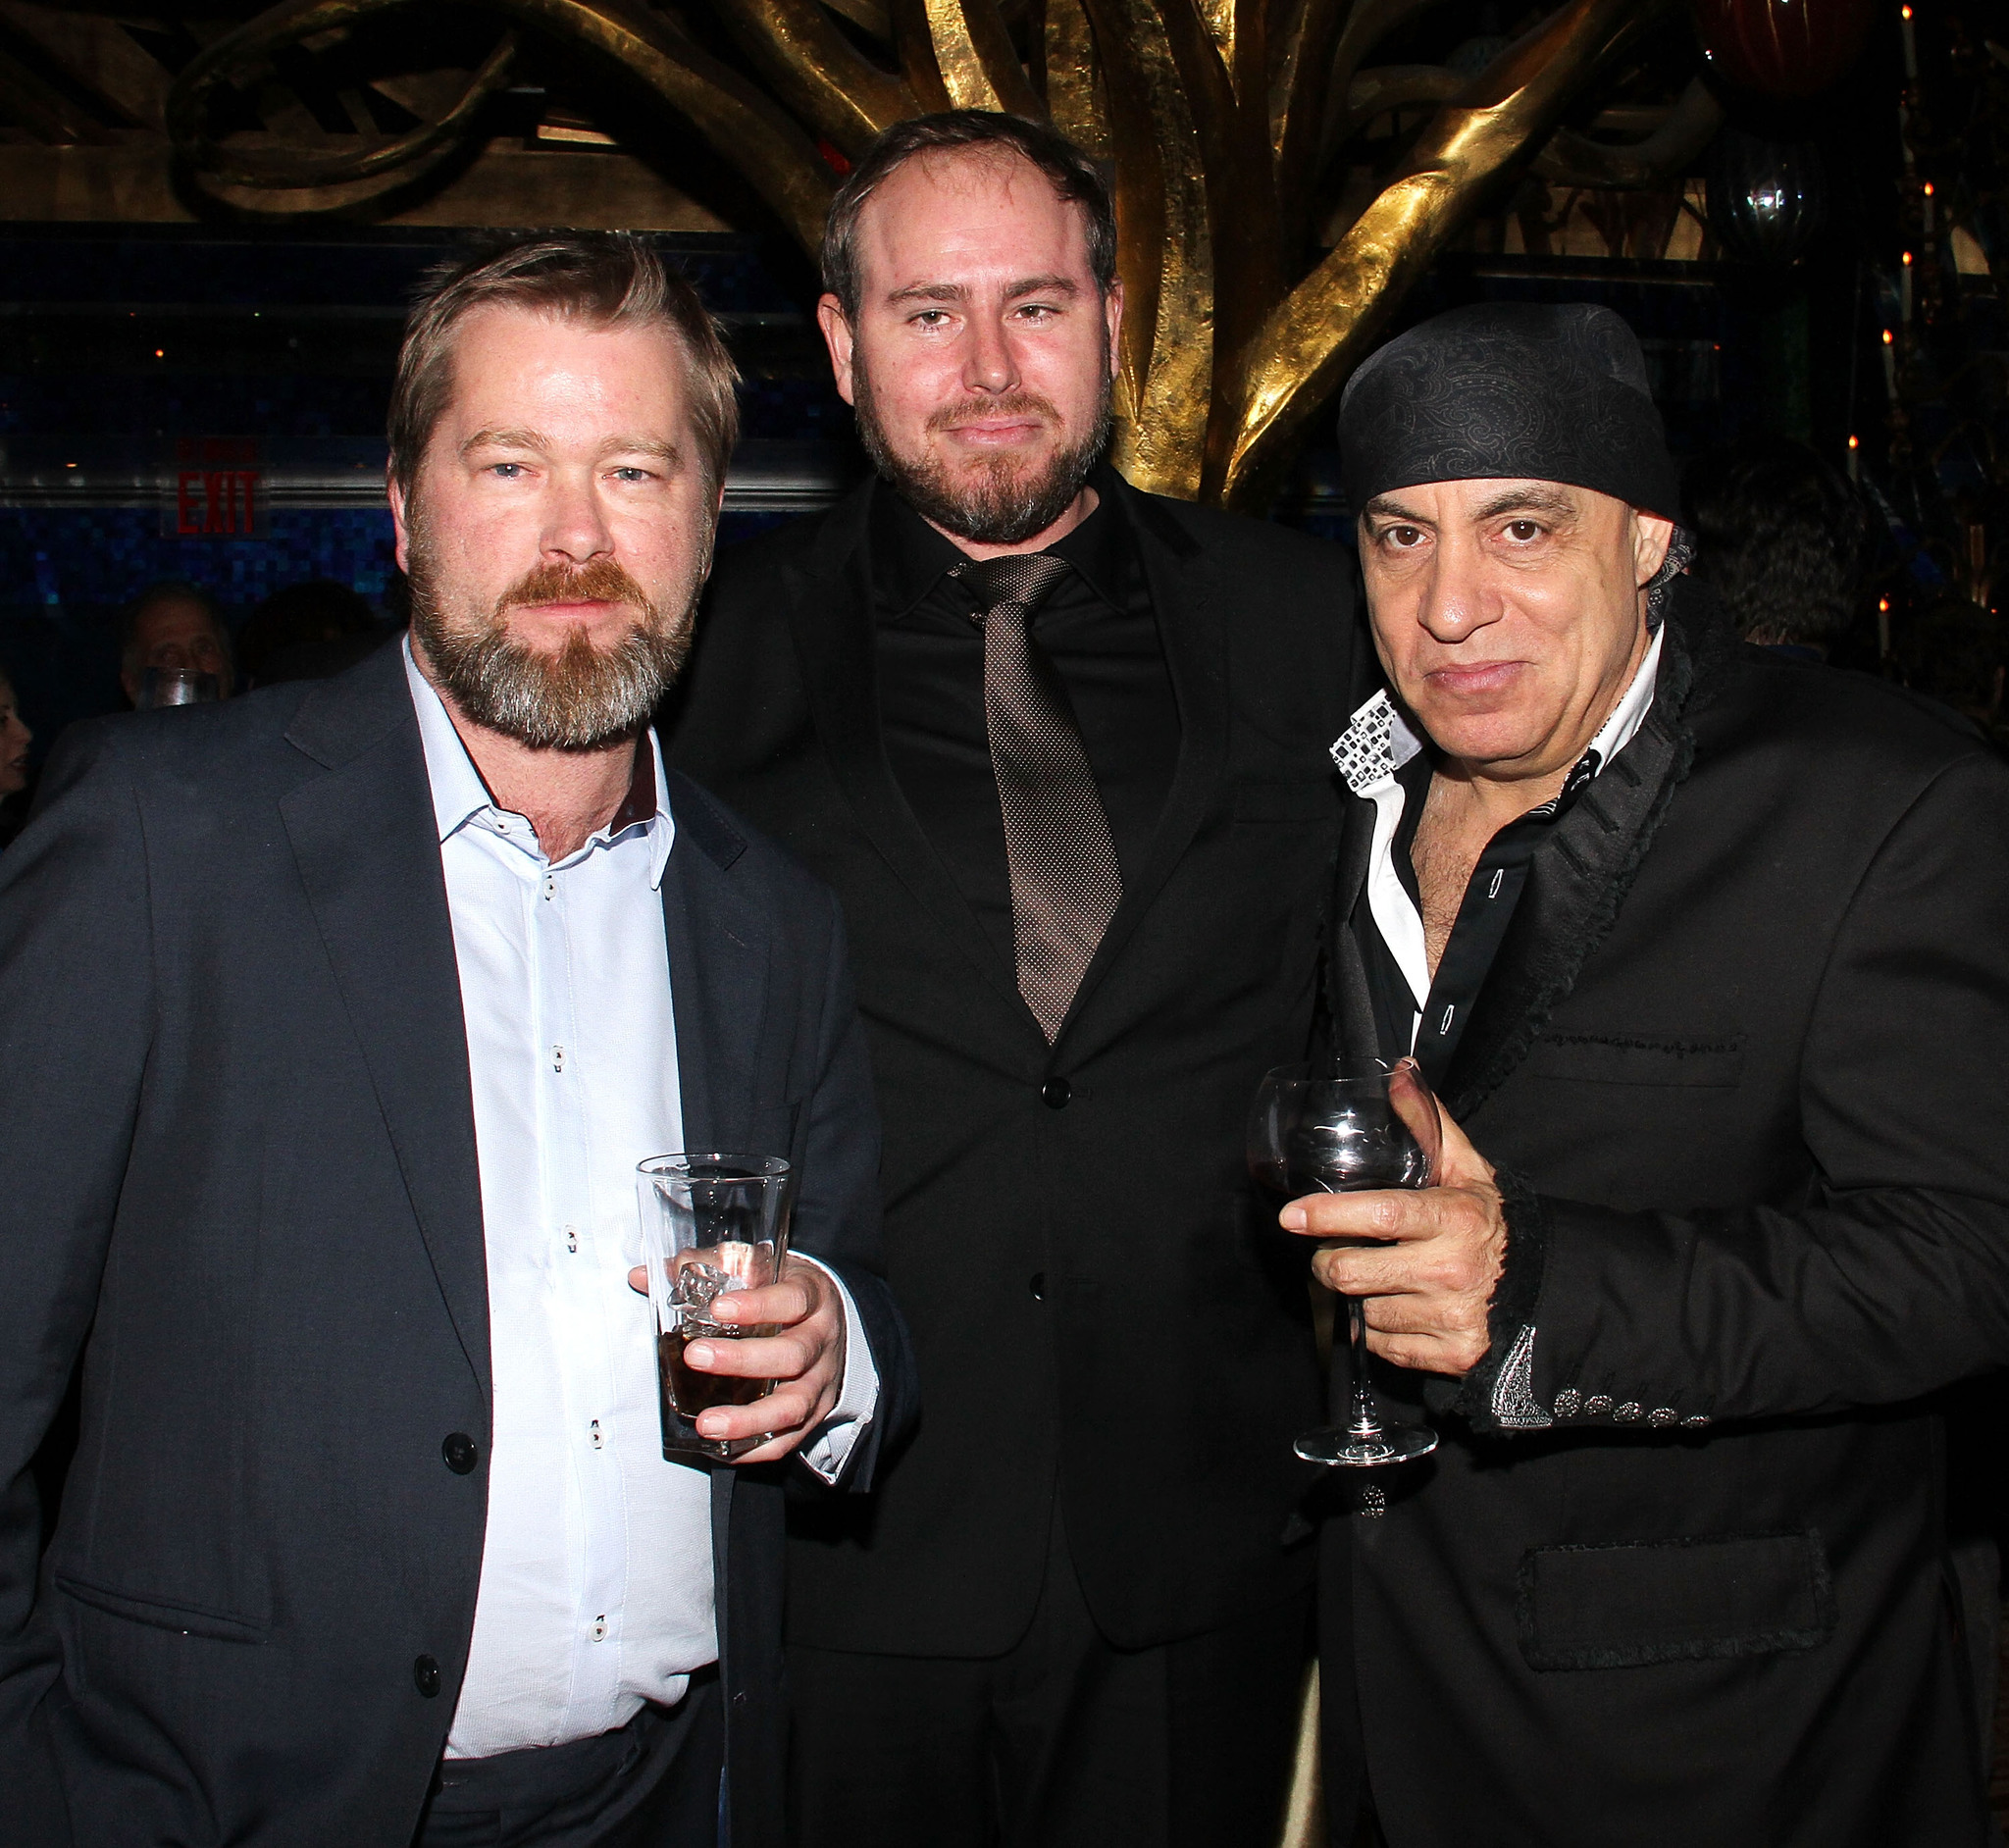 Steven Van Zandt, Tommy Karlsen and Fridtjov Såheim at event of Lilyhammer (2012)